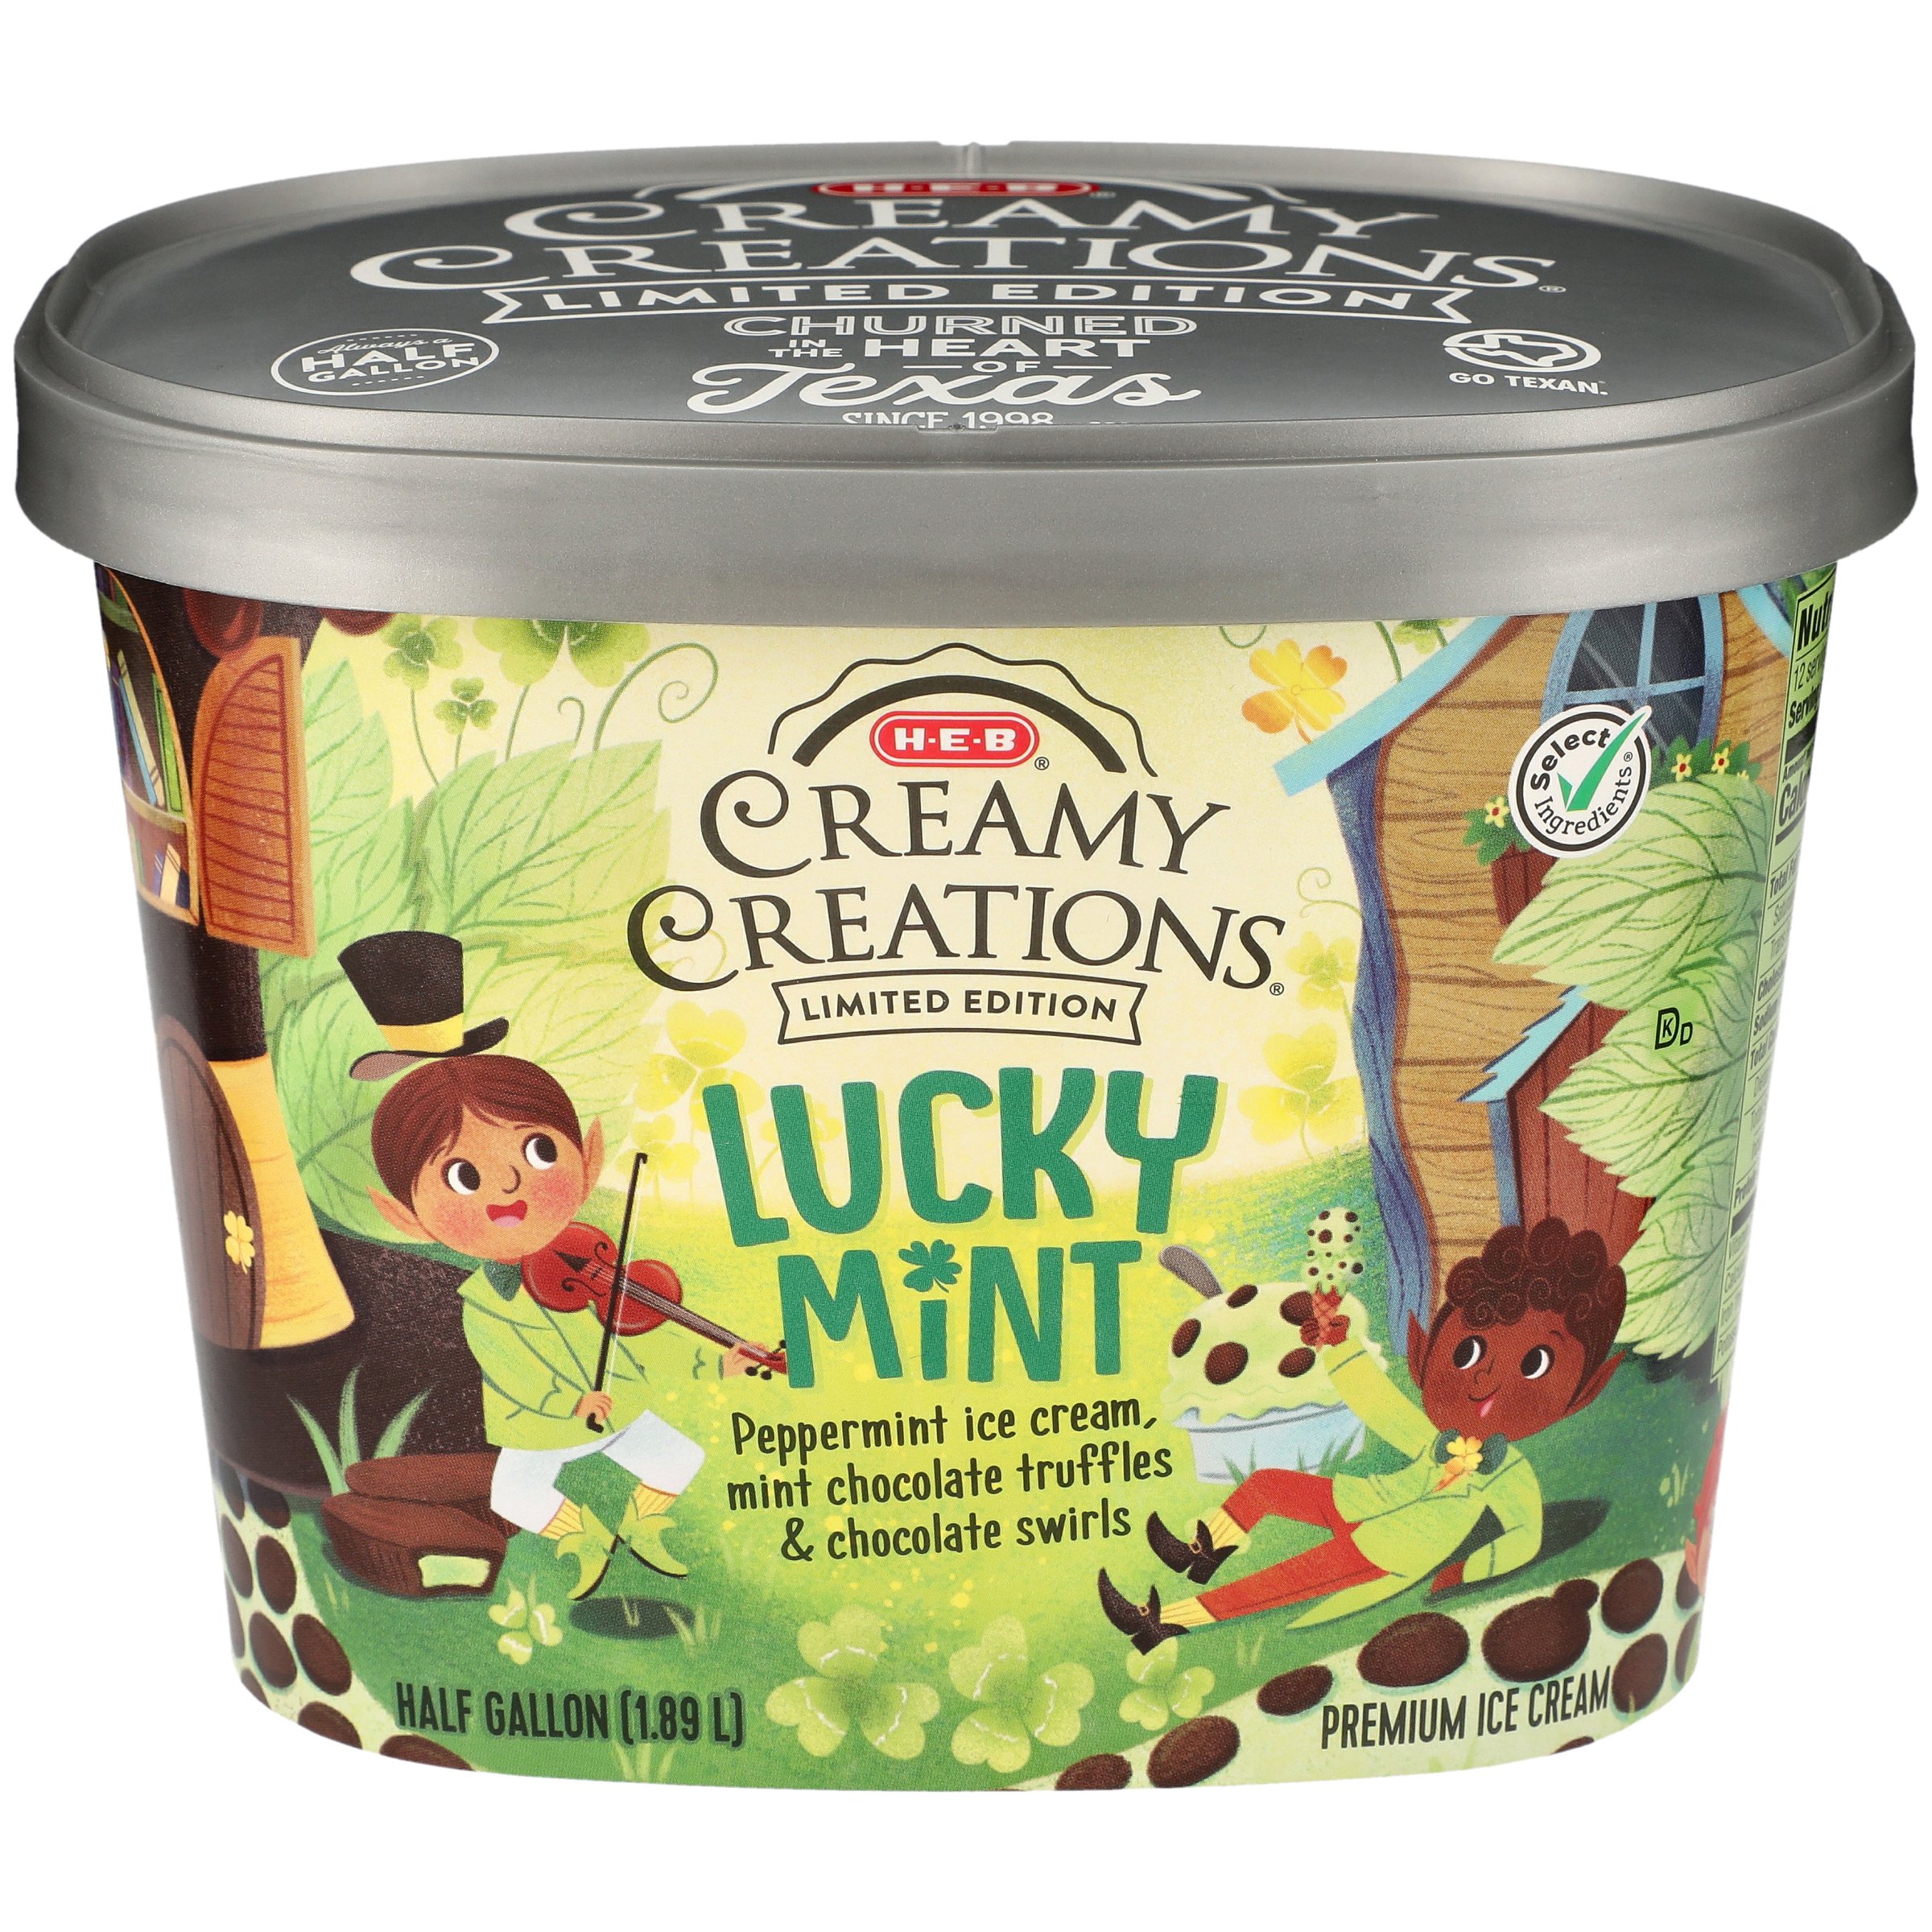 H-E-B Creamy Creations Lucky Mint Limited Edition Ice Cream